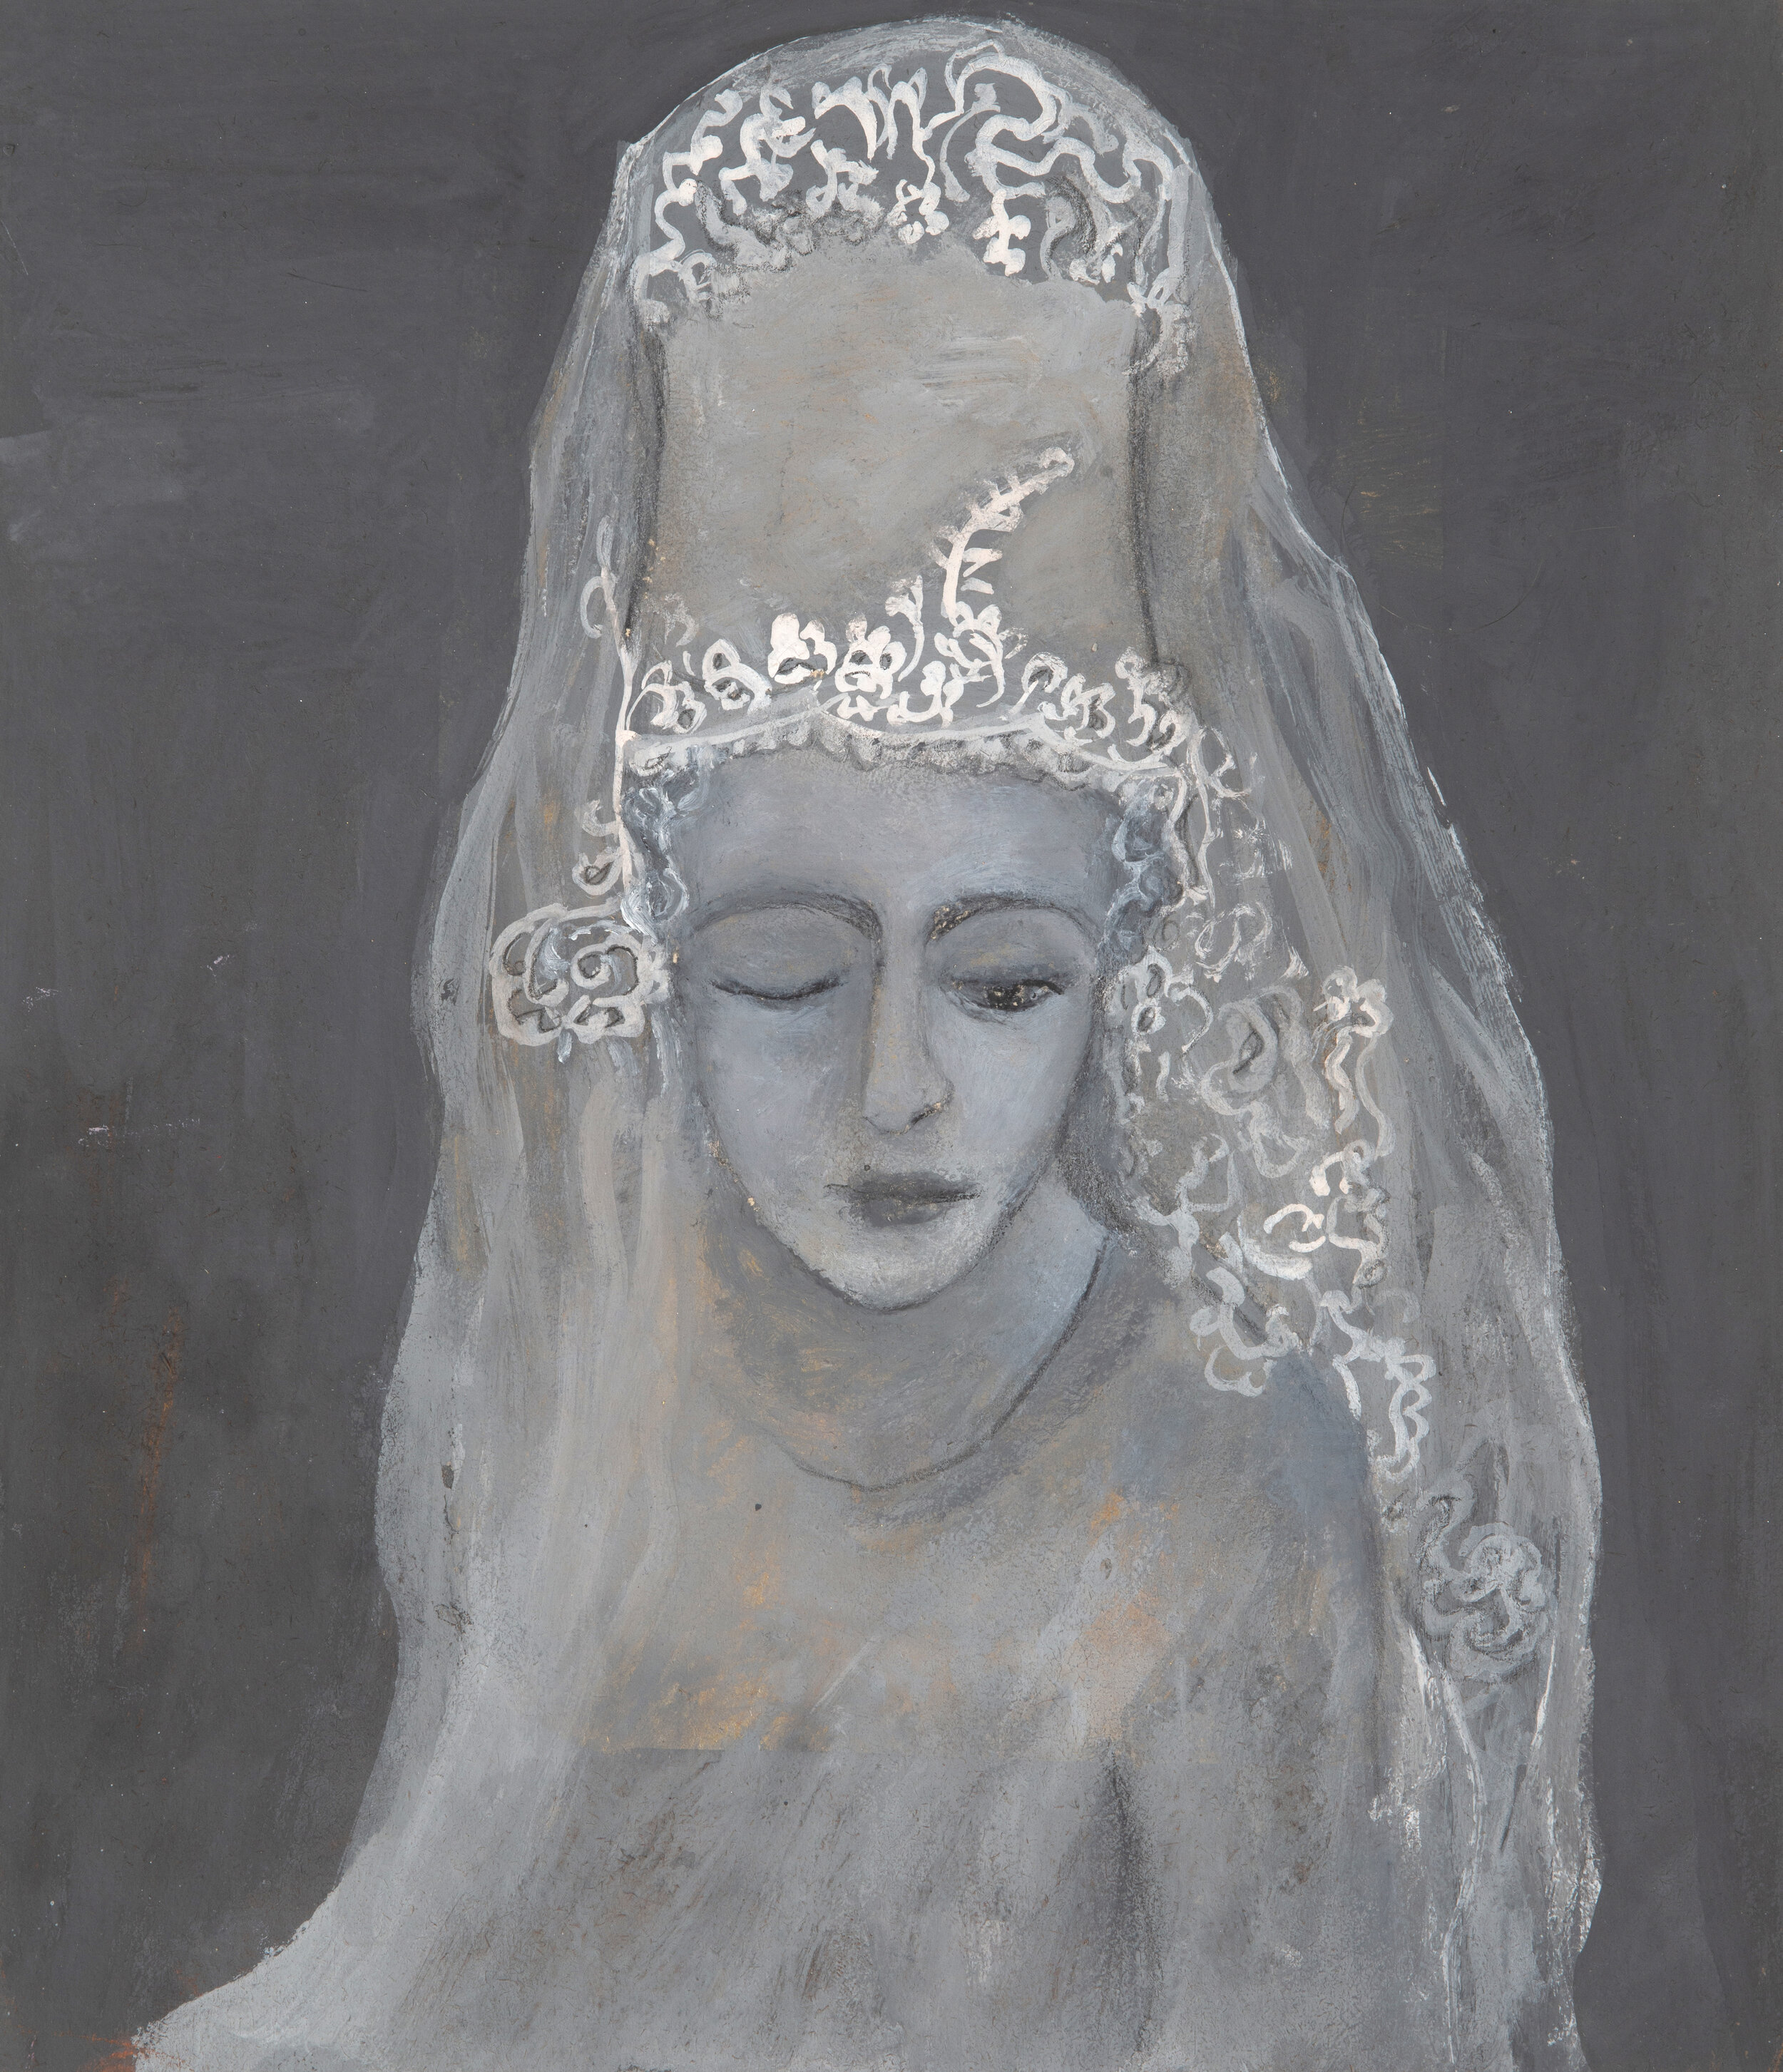  White Bride, 2018, gouache &amp; acrylic painting on paper, 17.5 x 20.5 cm 